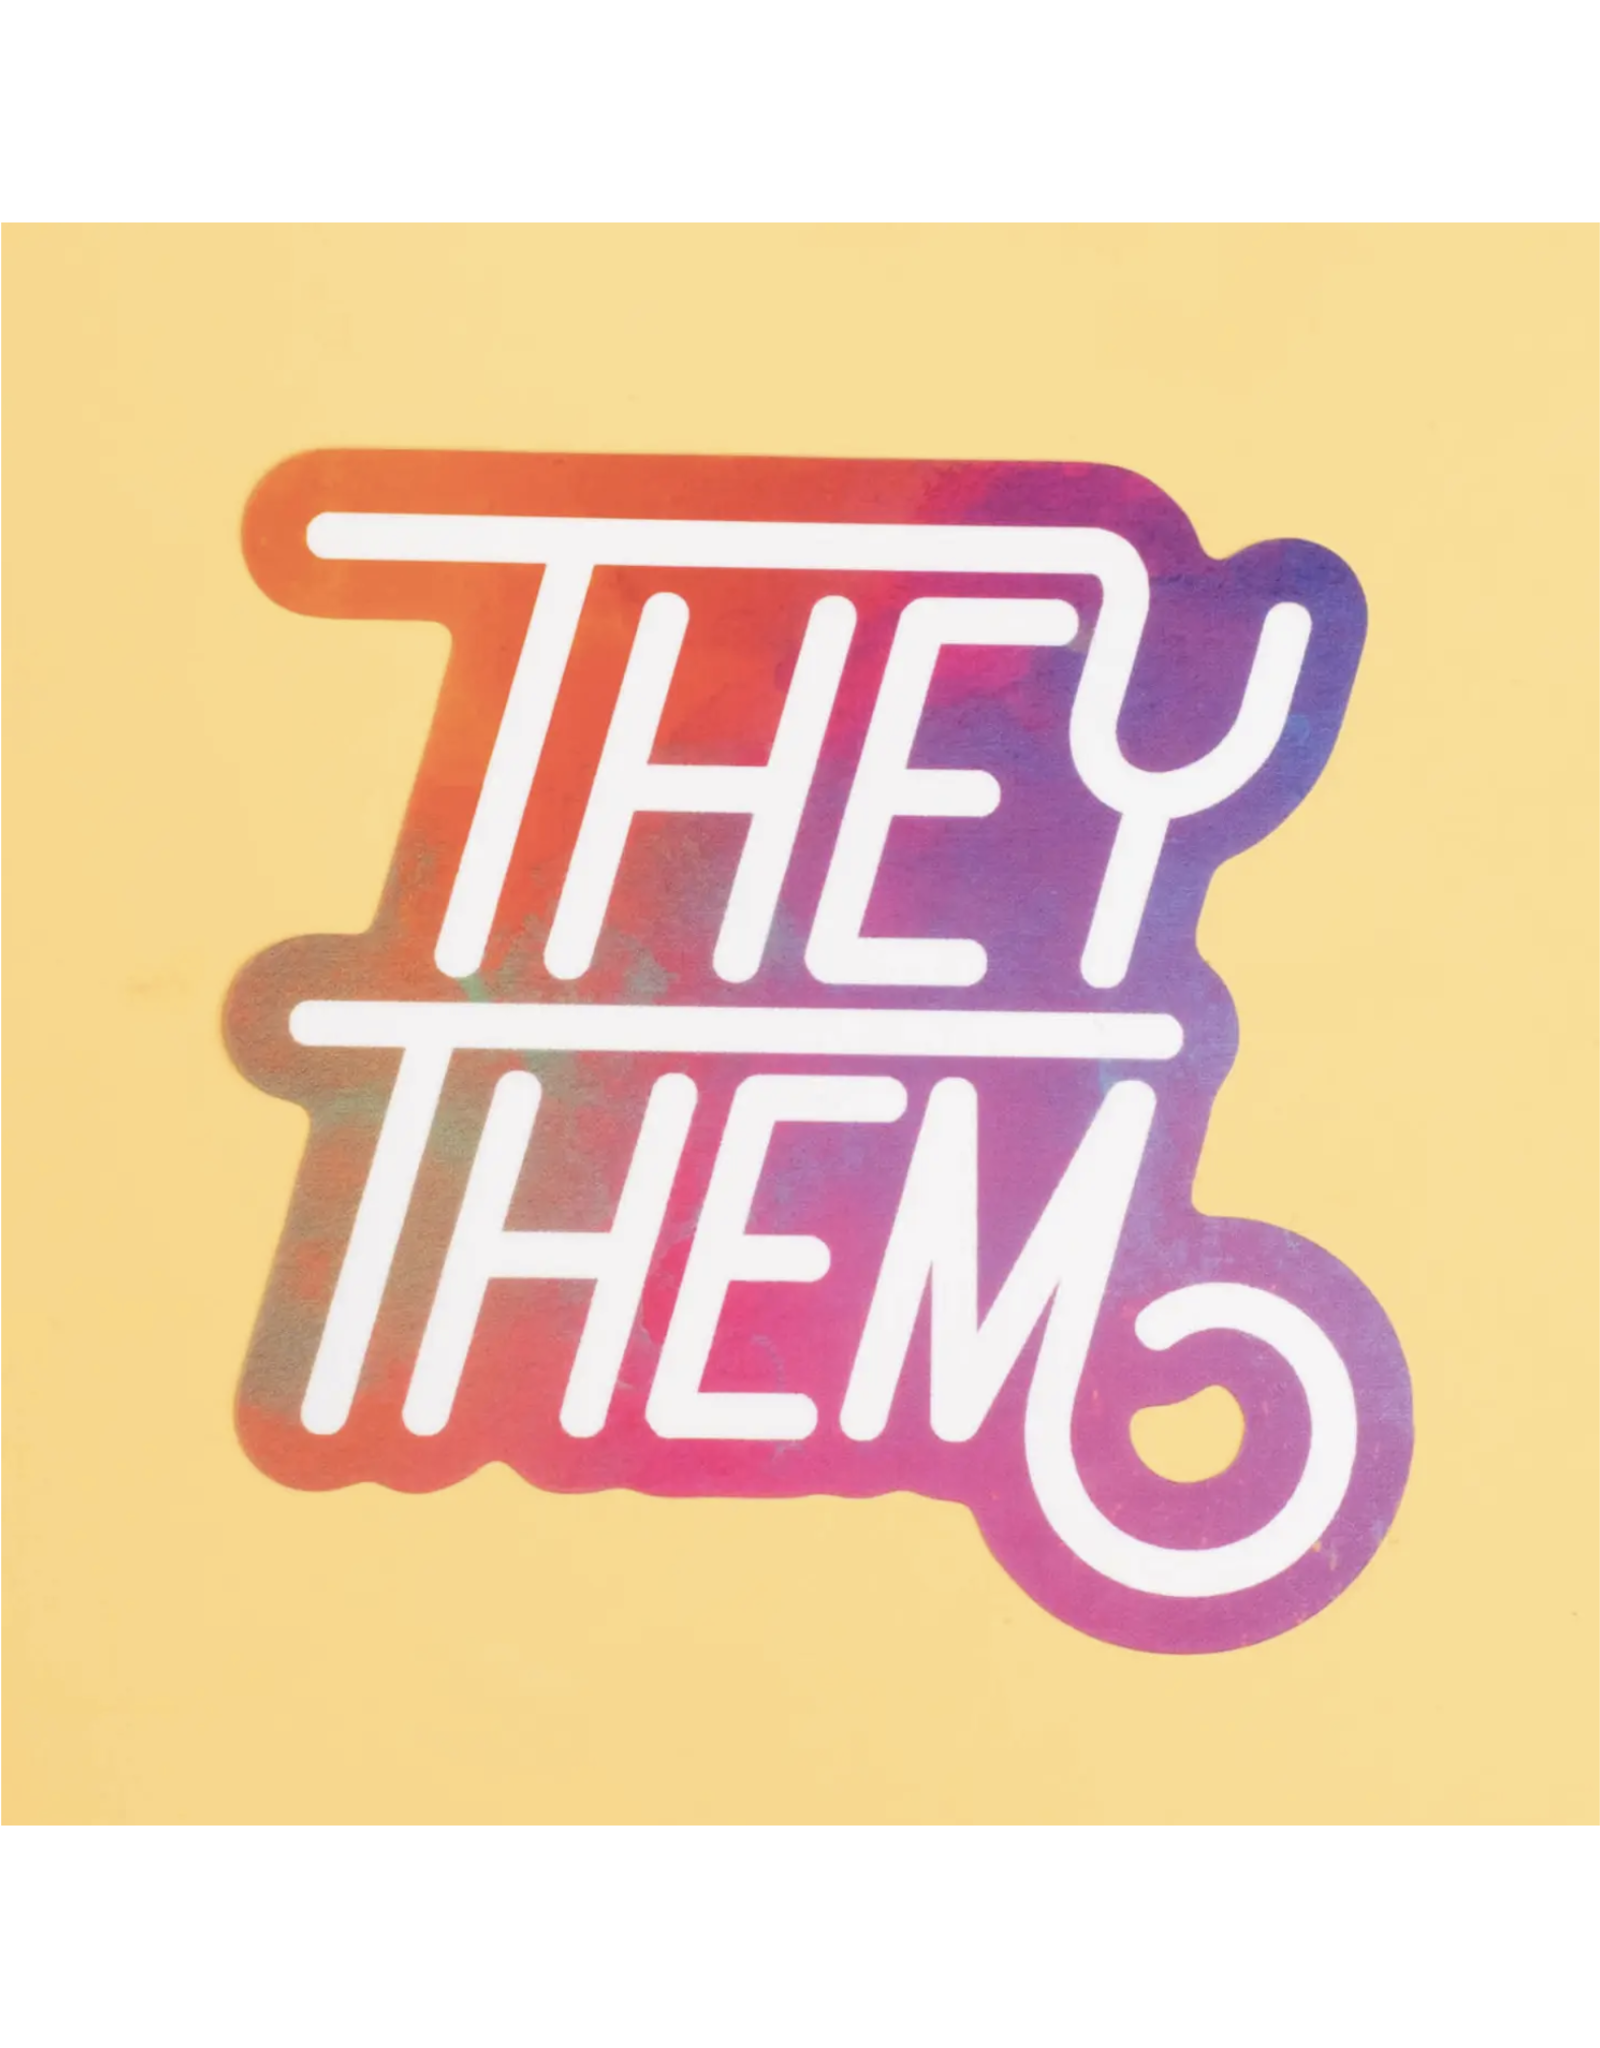 Pronoun Sticker Sheet - They/Them